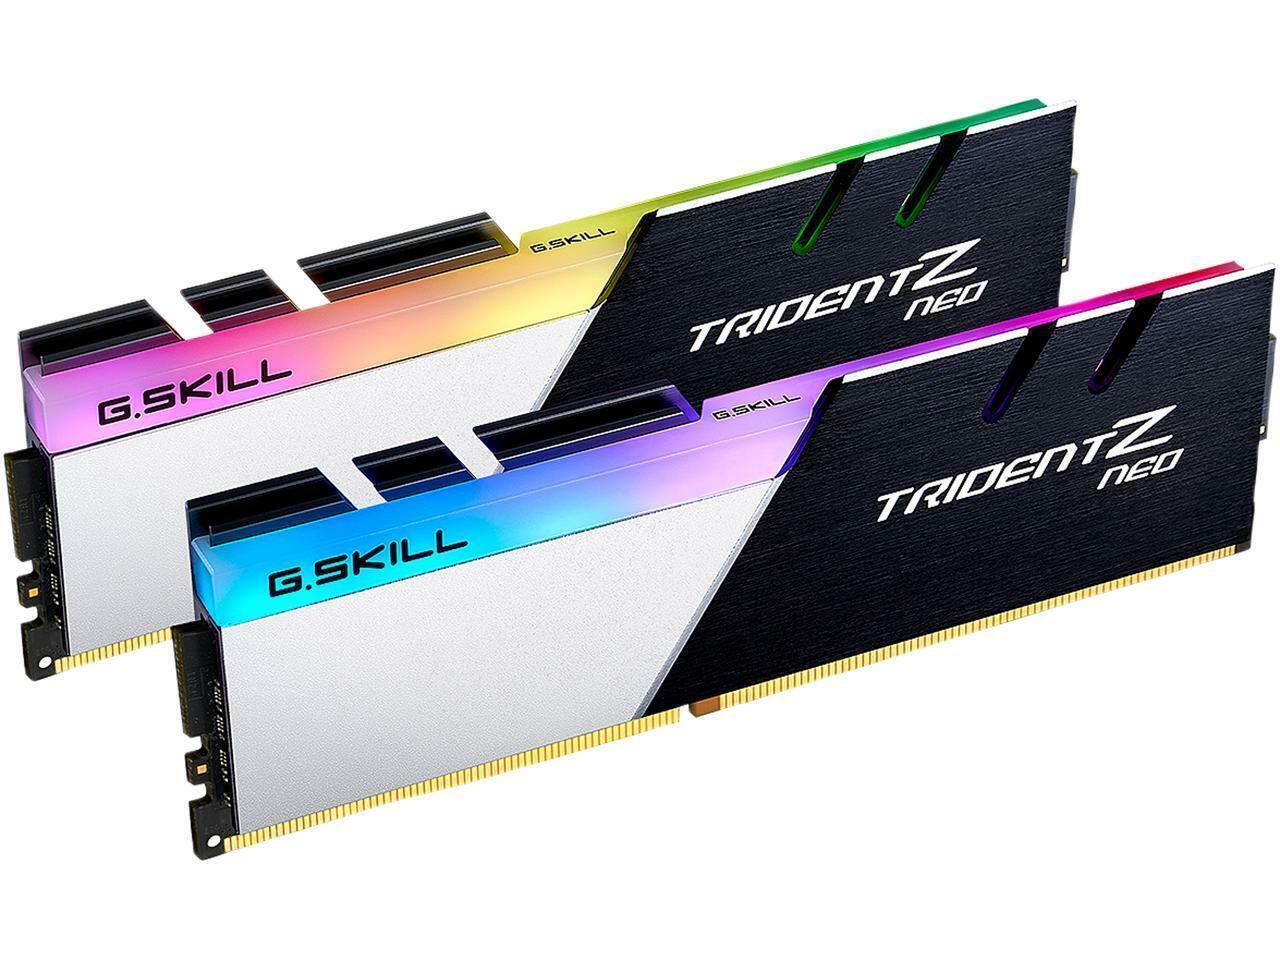 G.SKILL Trident Z Neo (For AMD Ryzen) Series 32GB (2 x 16GB) 288-Pin RGB DDR4 SD